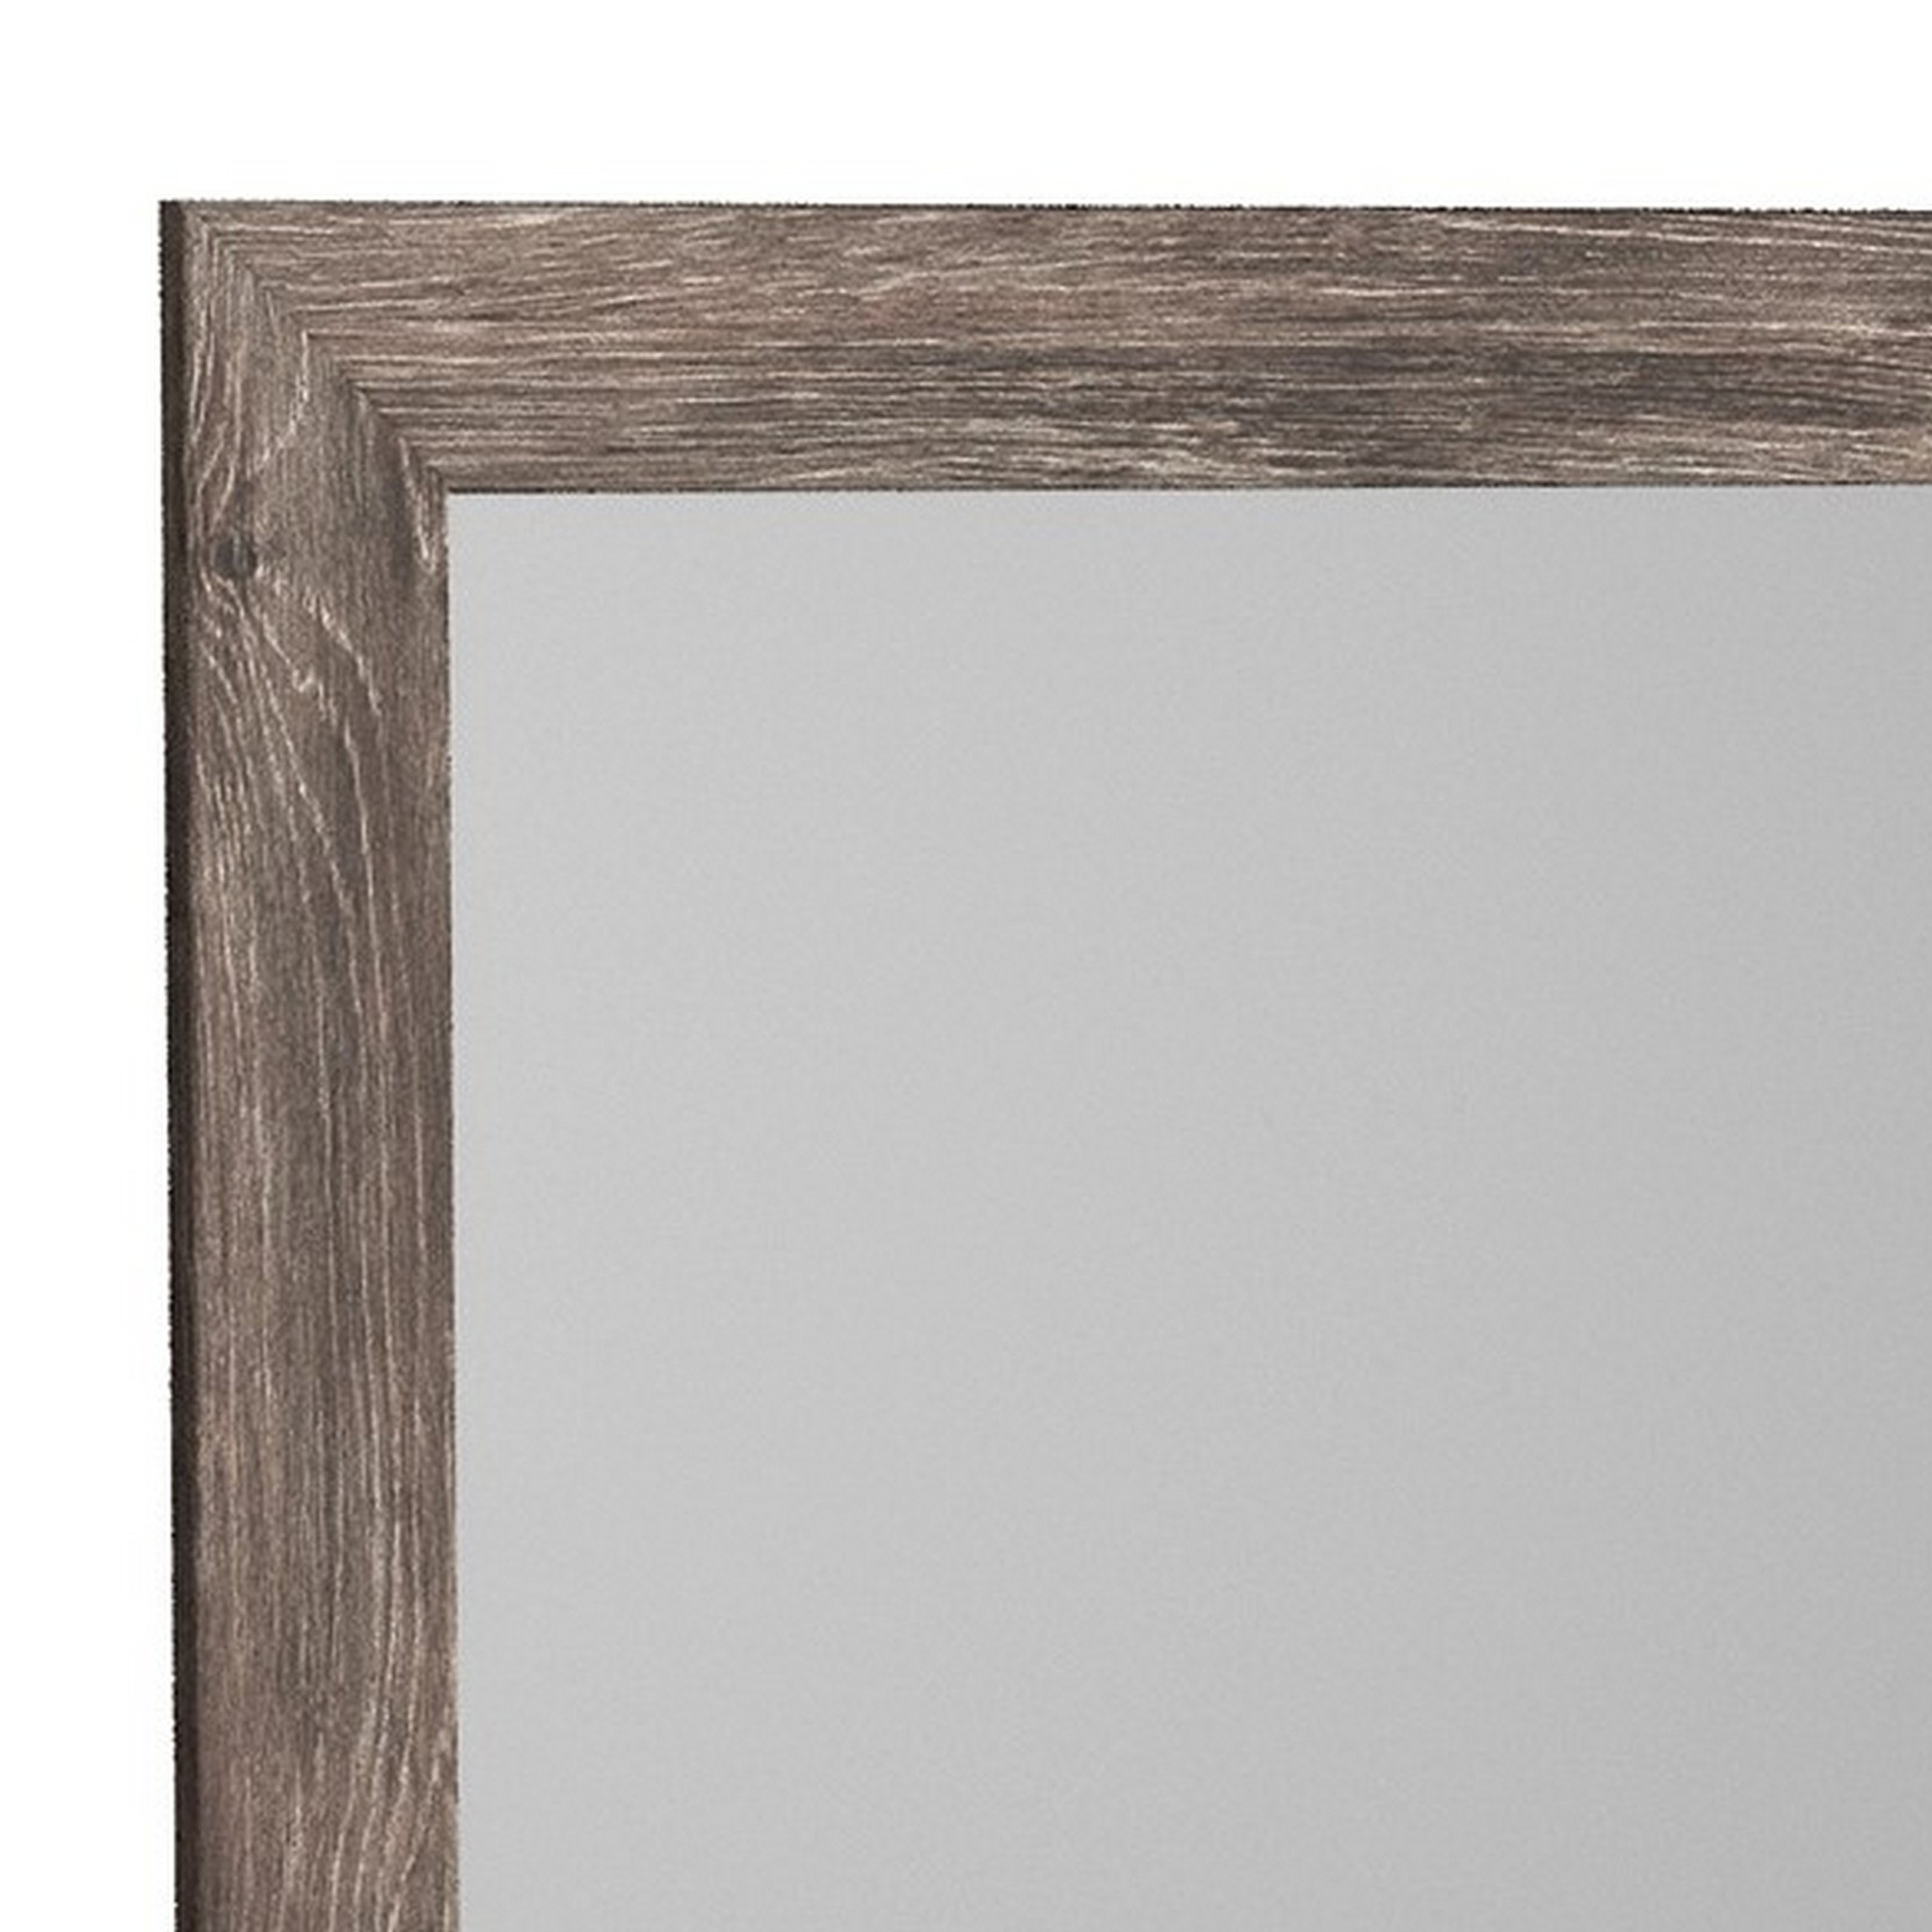 Bedroom Mirror With Replicated Grain Details, Rustic Gray- Saltoro Sherpi